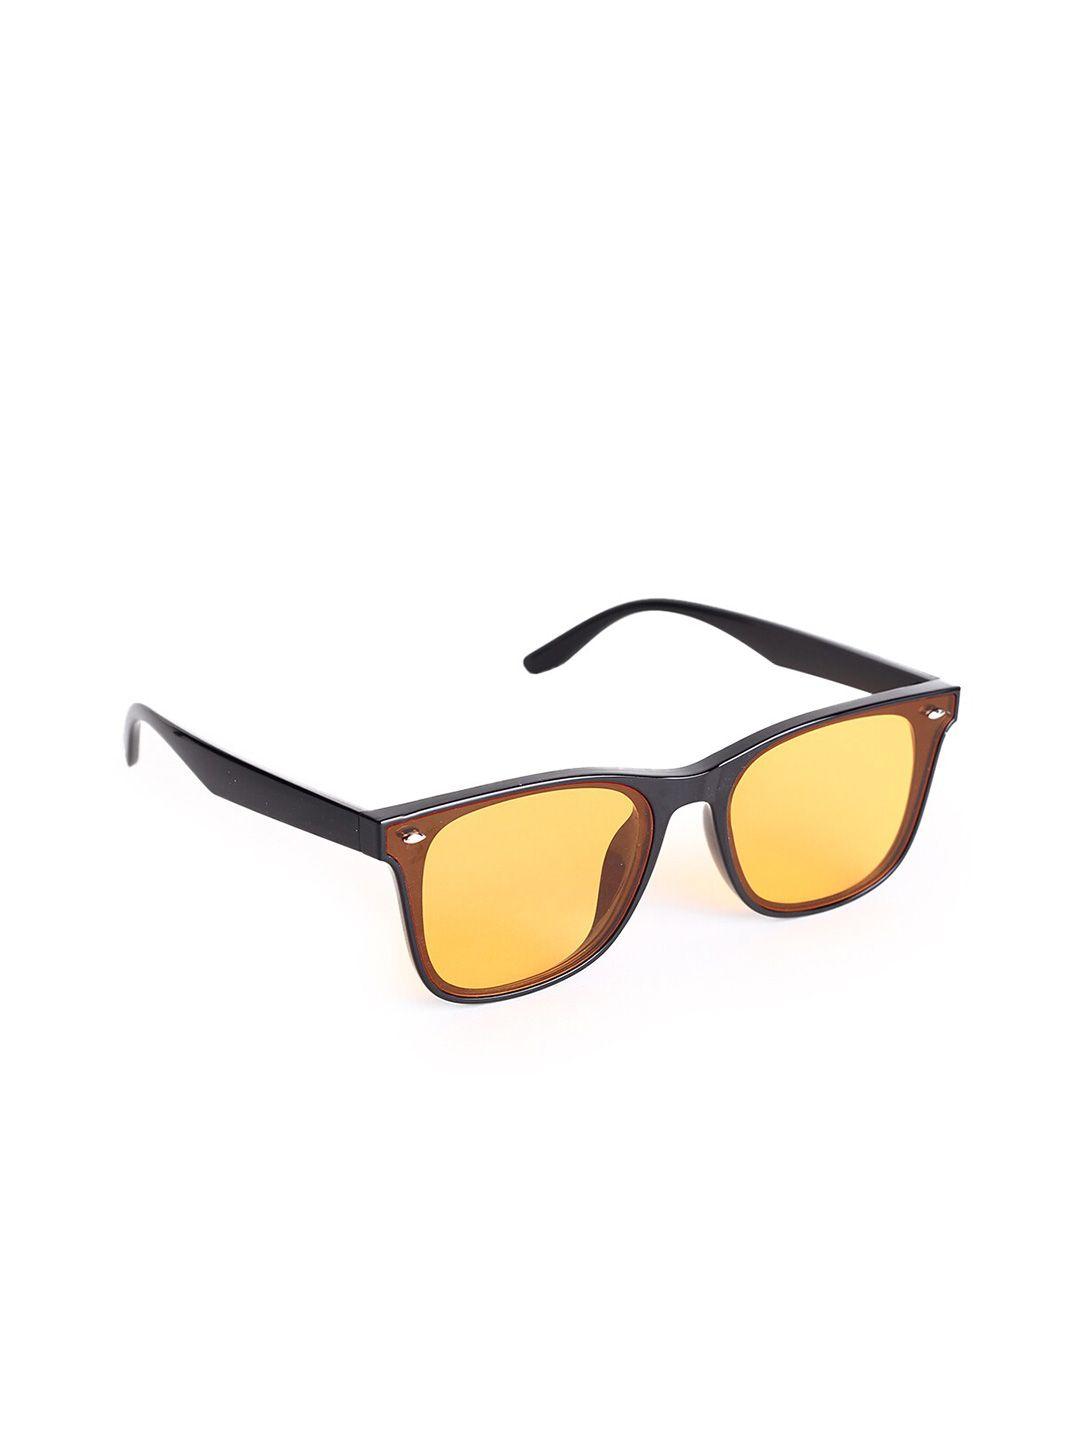 hashburys unisex brown lens & black wayfarer sunglasses with uv protected lens